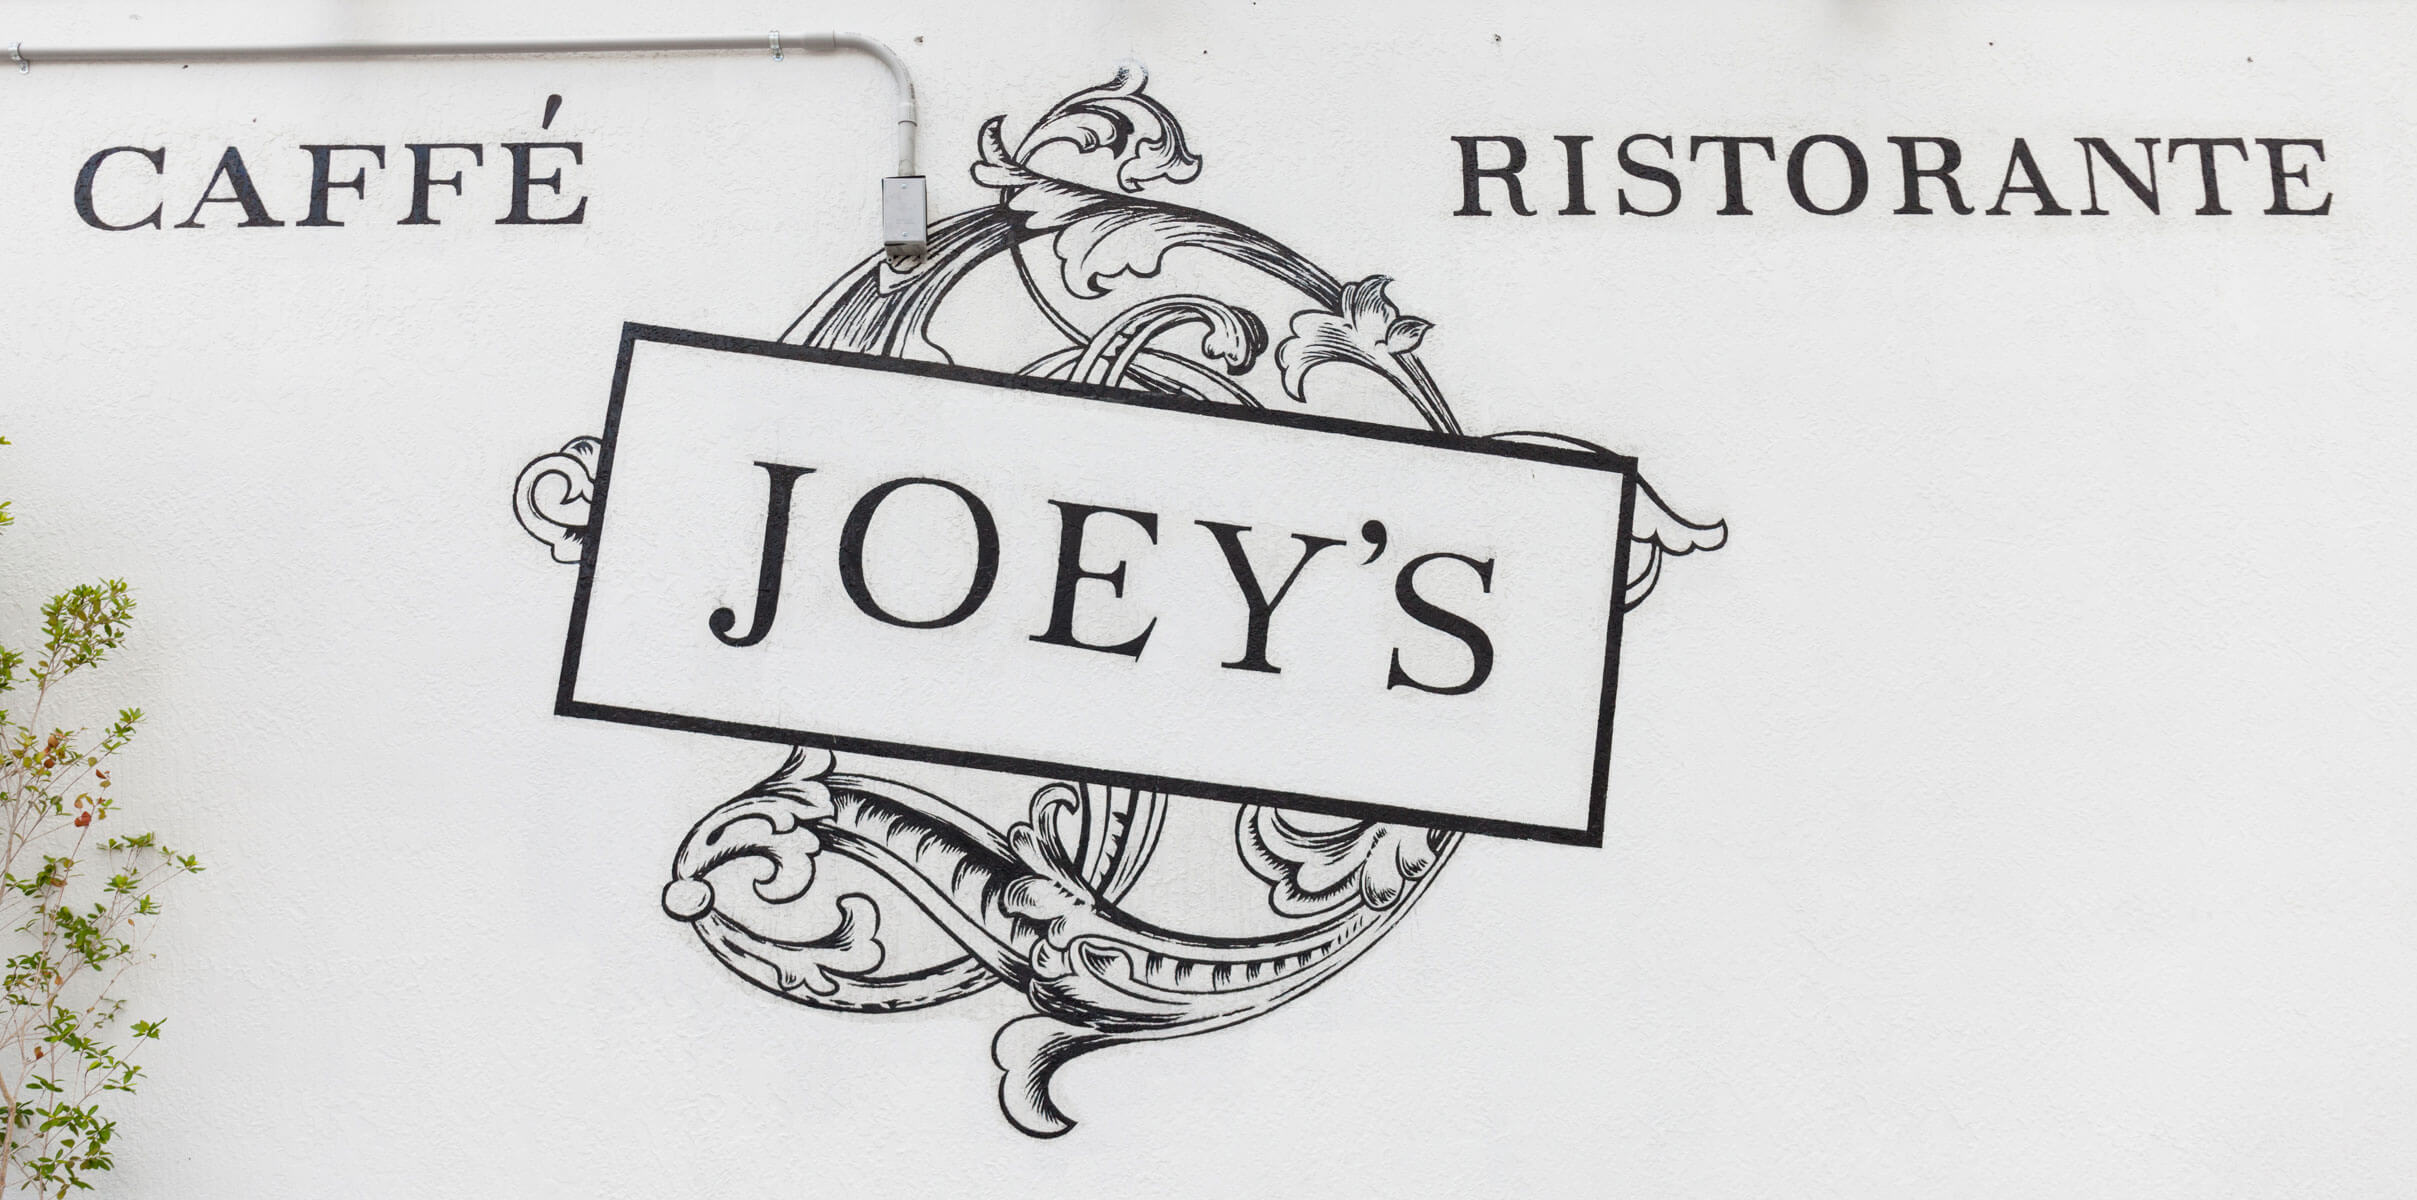 Joey's Cafe Ristorante signage